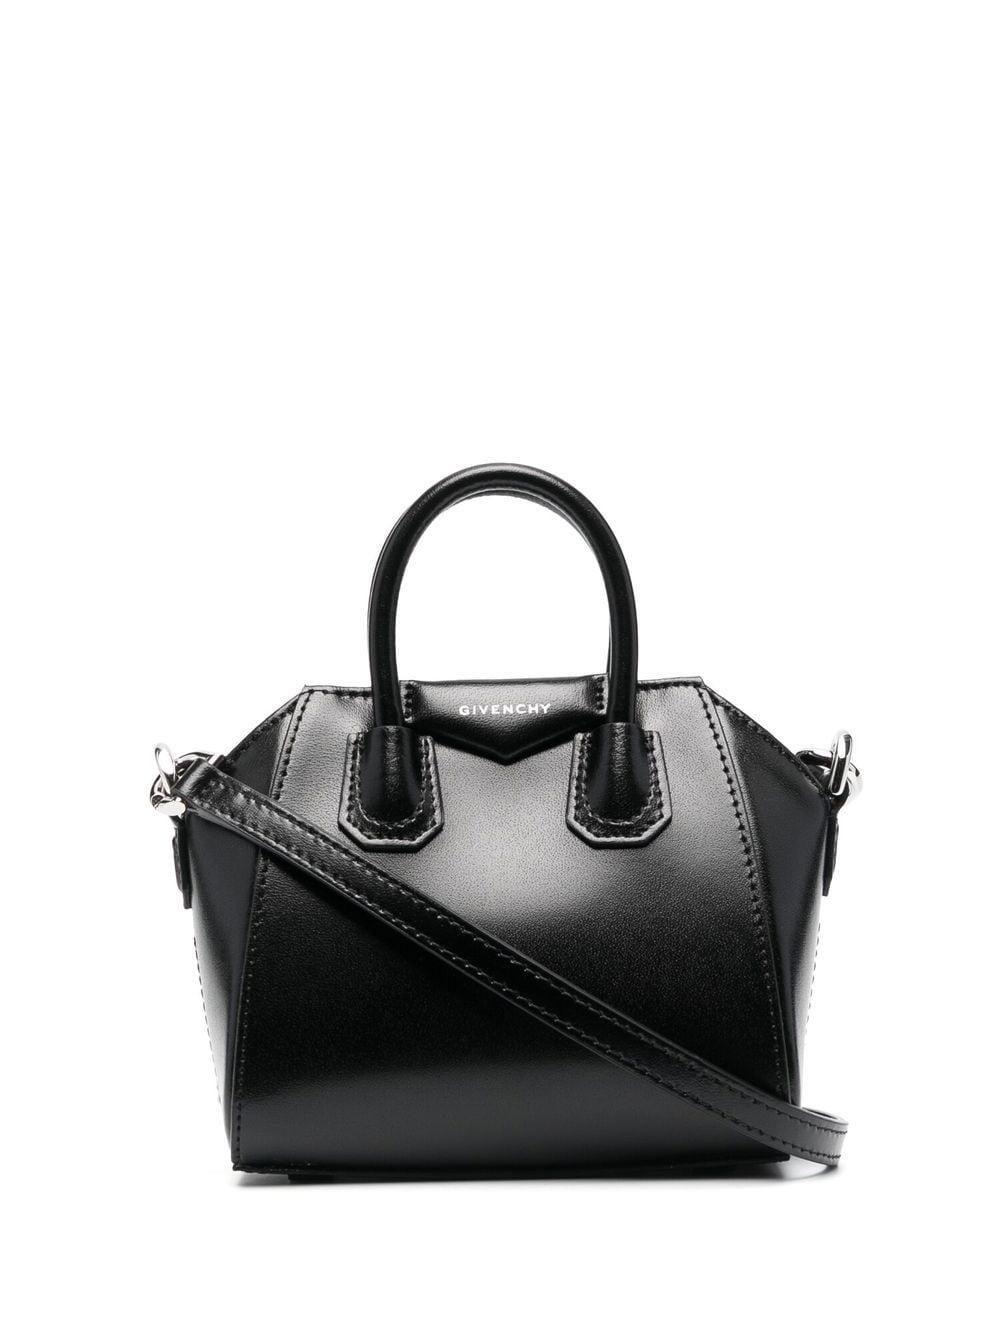 Givenchy Antigona Micro Leather Tote Bag in Black | Lyst